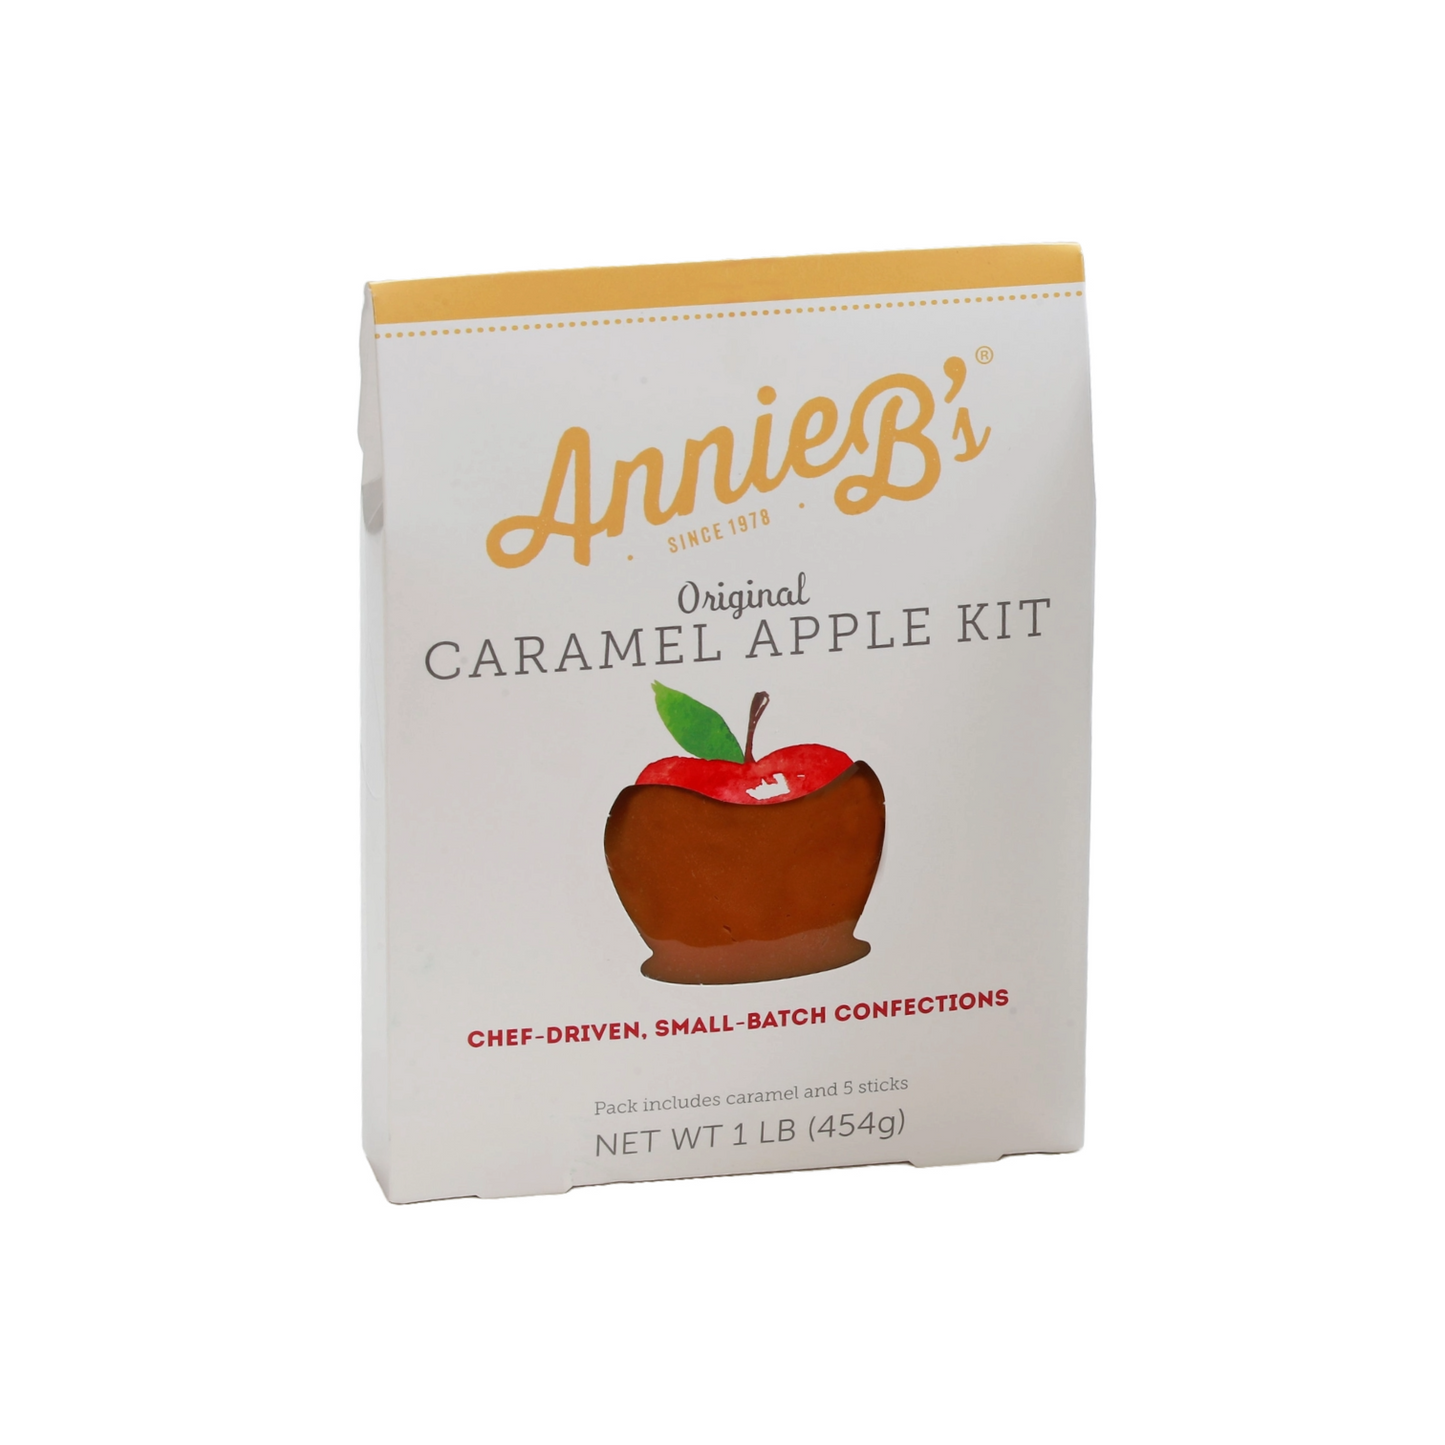 Caramel Apple Kit by Annie B's 